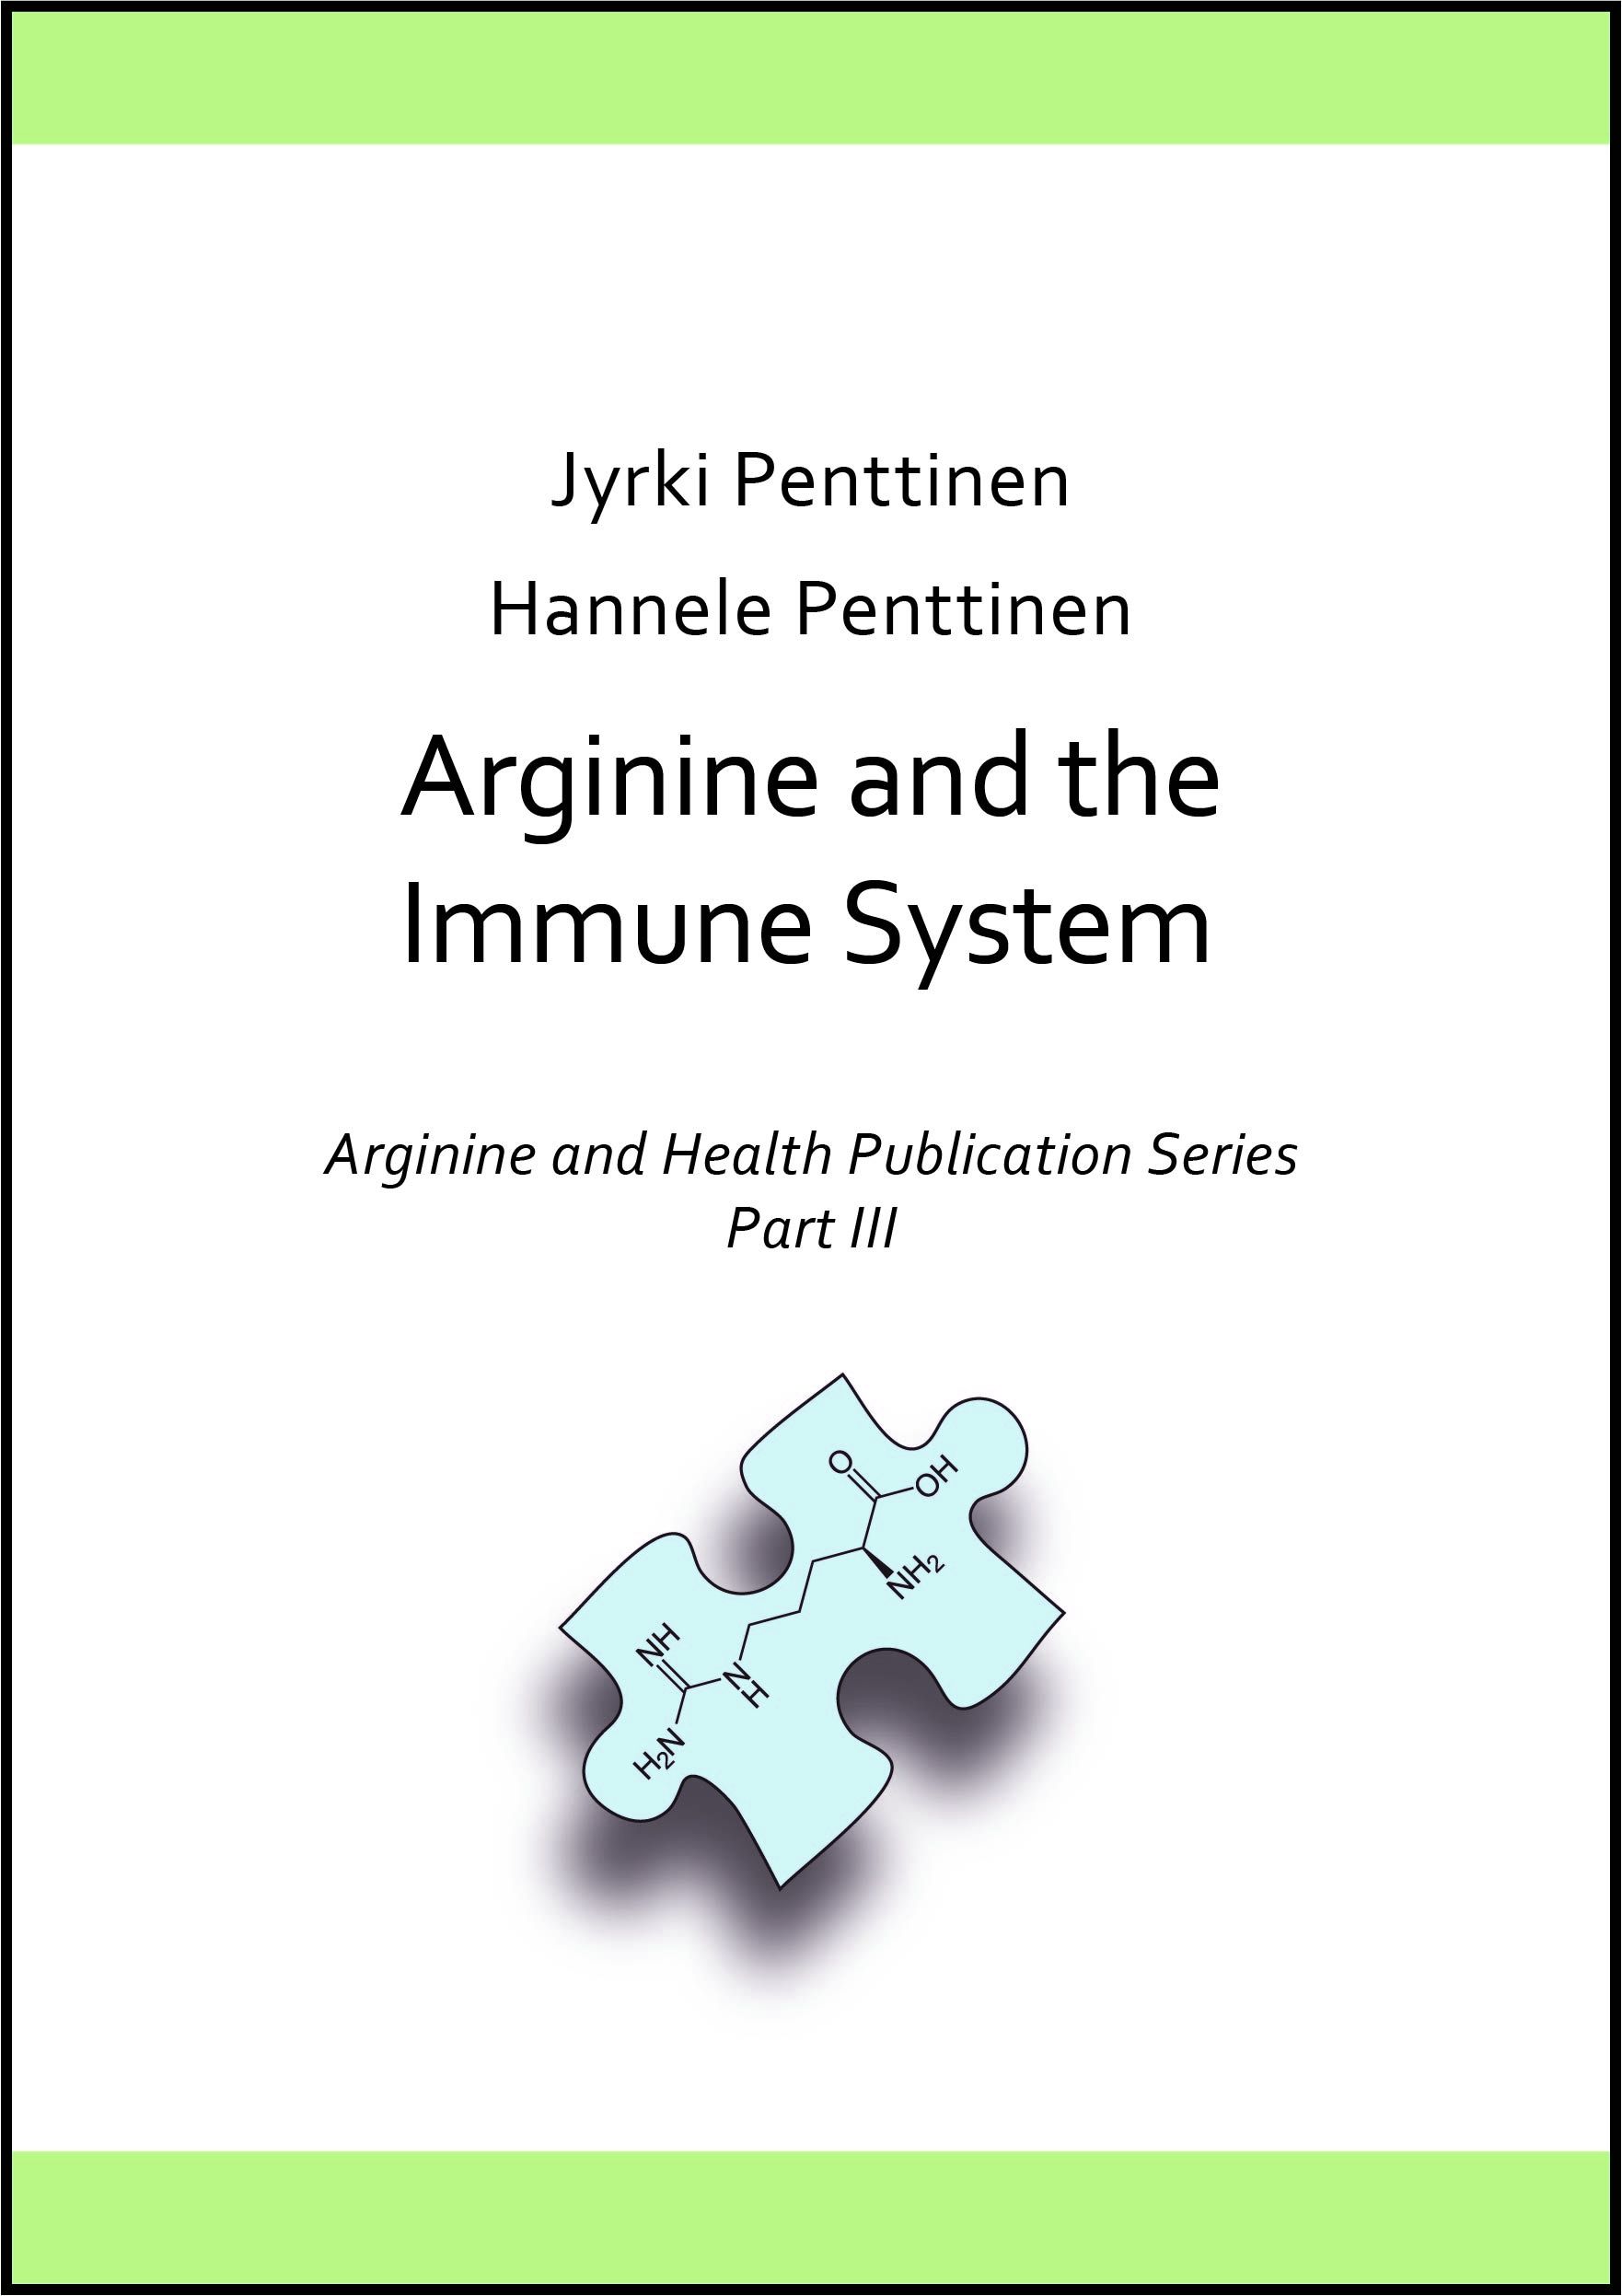 Jyrki Penttinen & Hannele Penttinen : Arginine and the immune system